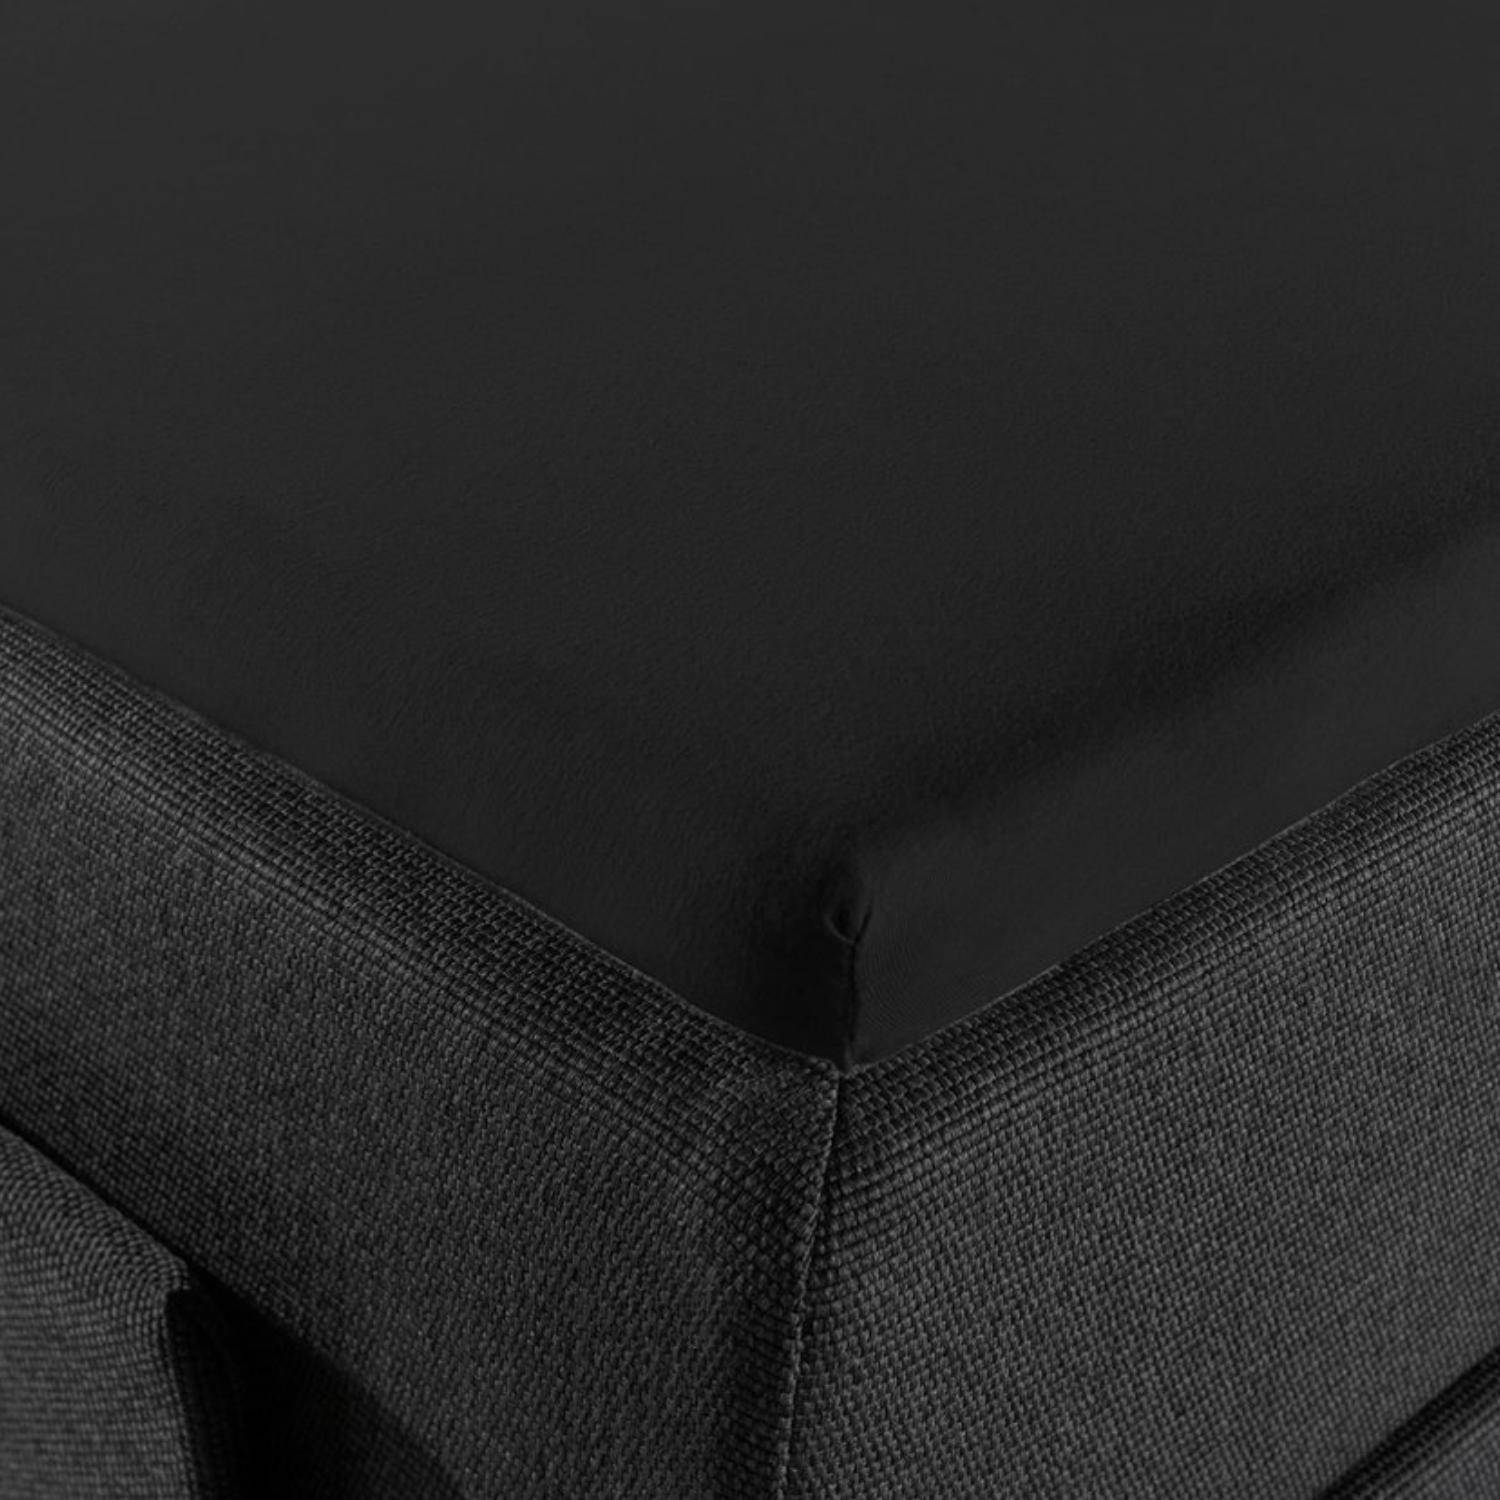 Droomtextiel Topper Hoeslaken Dubbel Jersey Zwart - 200x220 cm - 100% Zacht Katoen